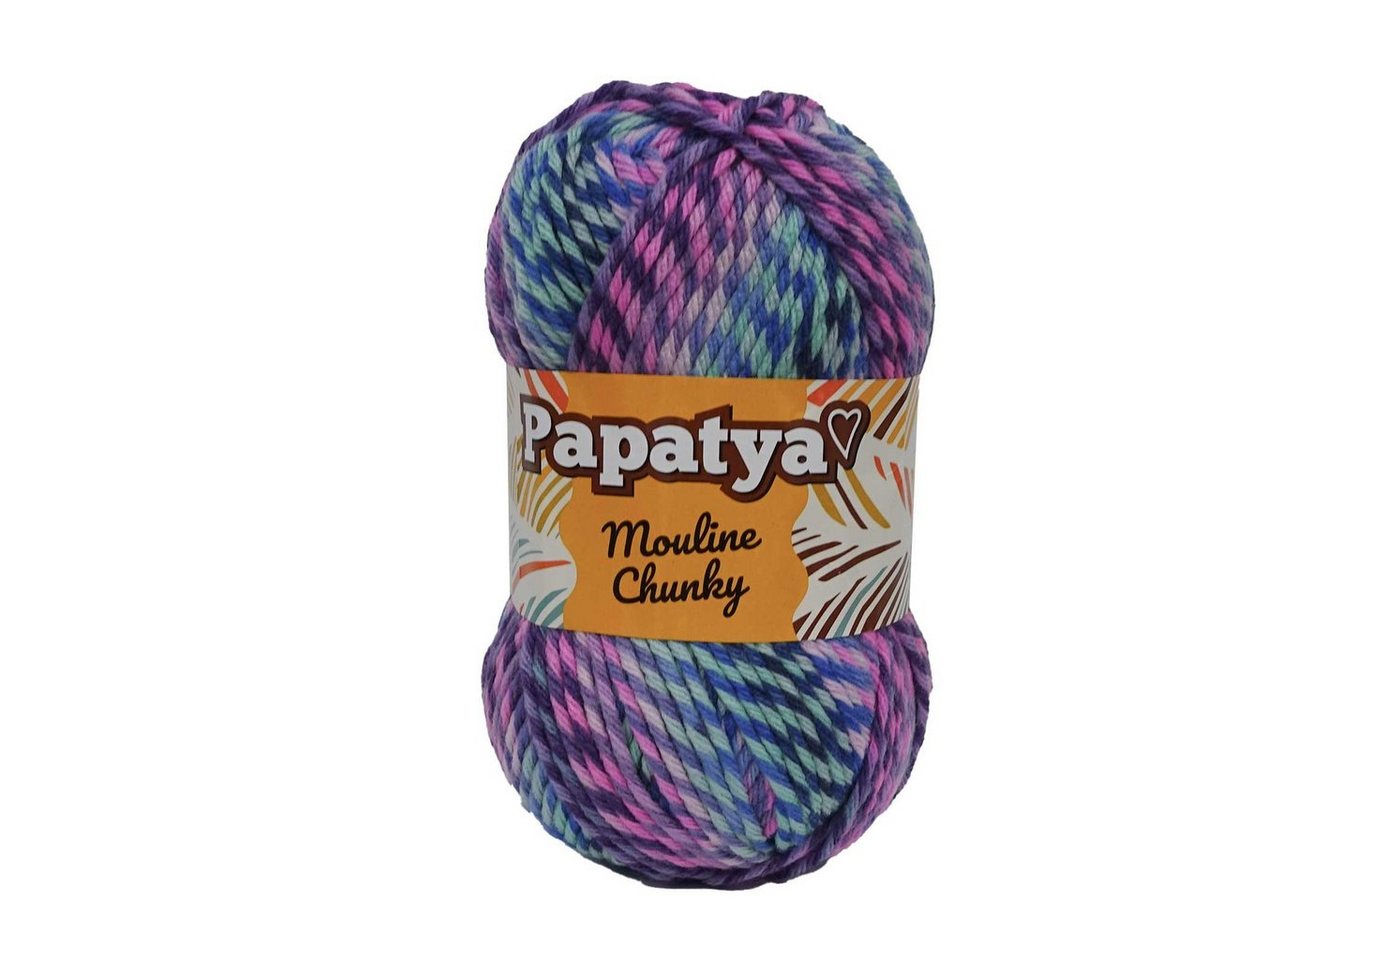 Papatya 100g Strickgarn Papatya Mouline Chunky Strickwolle mehrfarbig Effektgarn, 160 m, 5374 mehrfarbig von Papatya